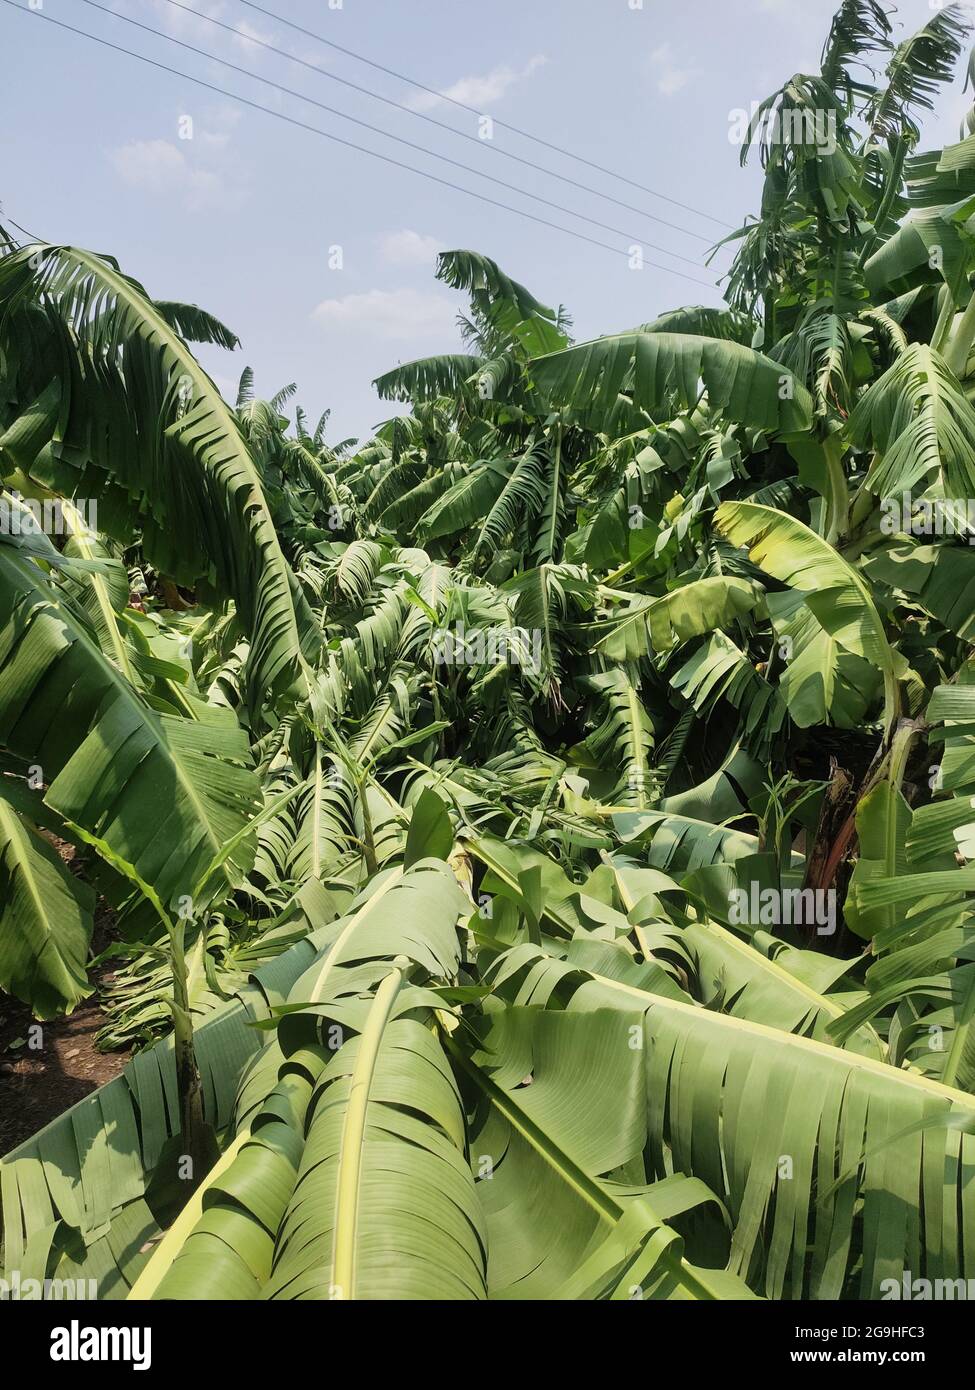 Banana plantation damaged by typhoon in India Stock Photo